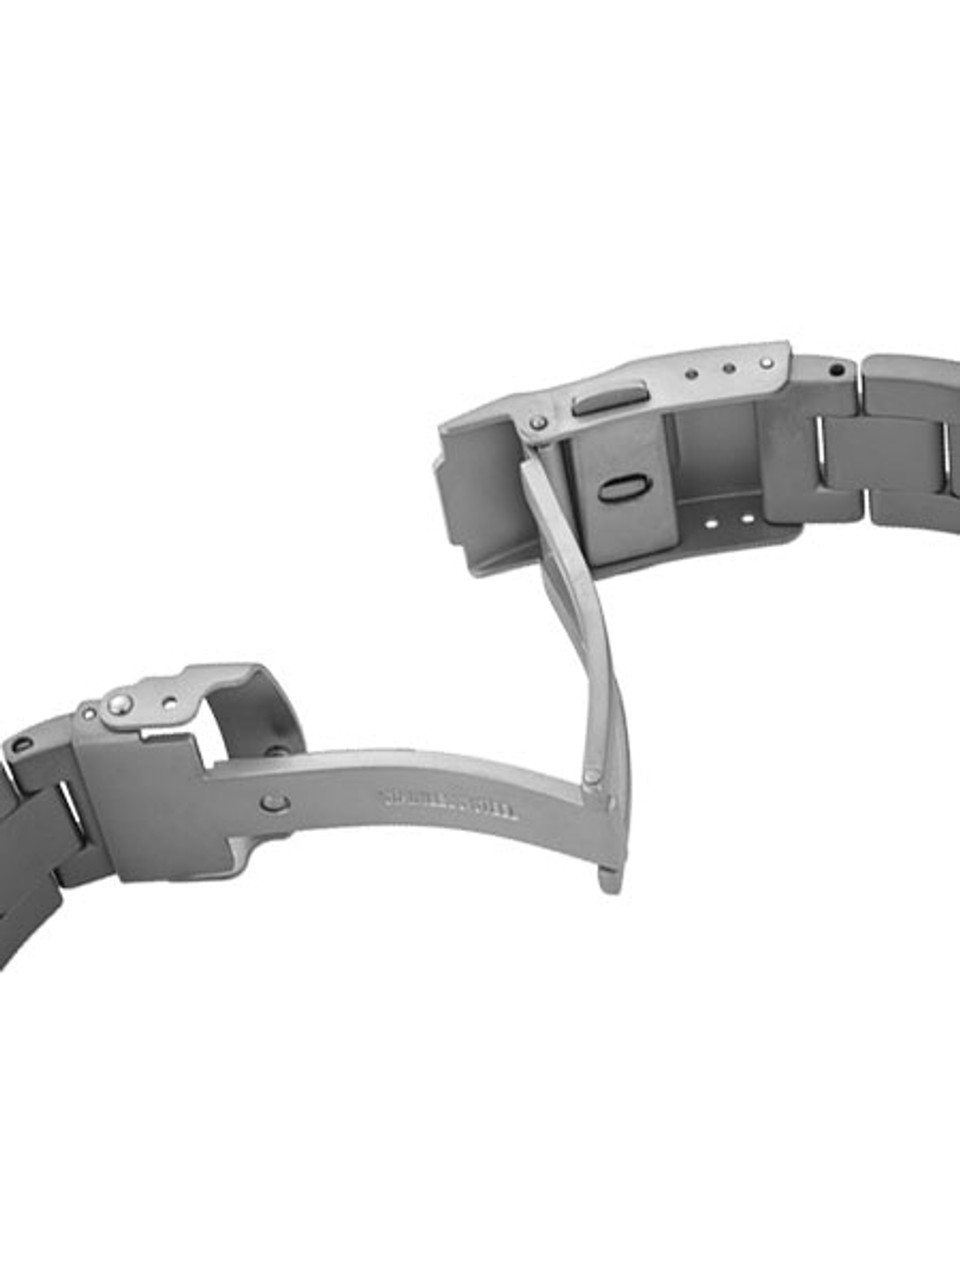 Islander Solid-Link Watch Bracelet